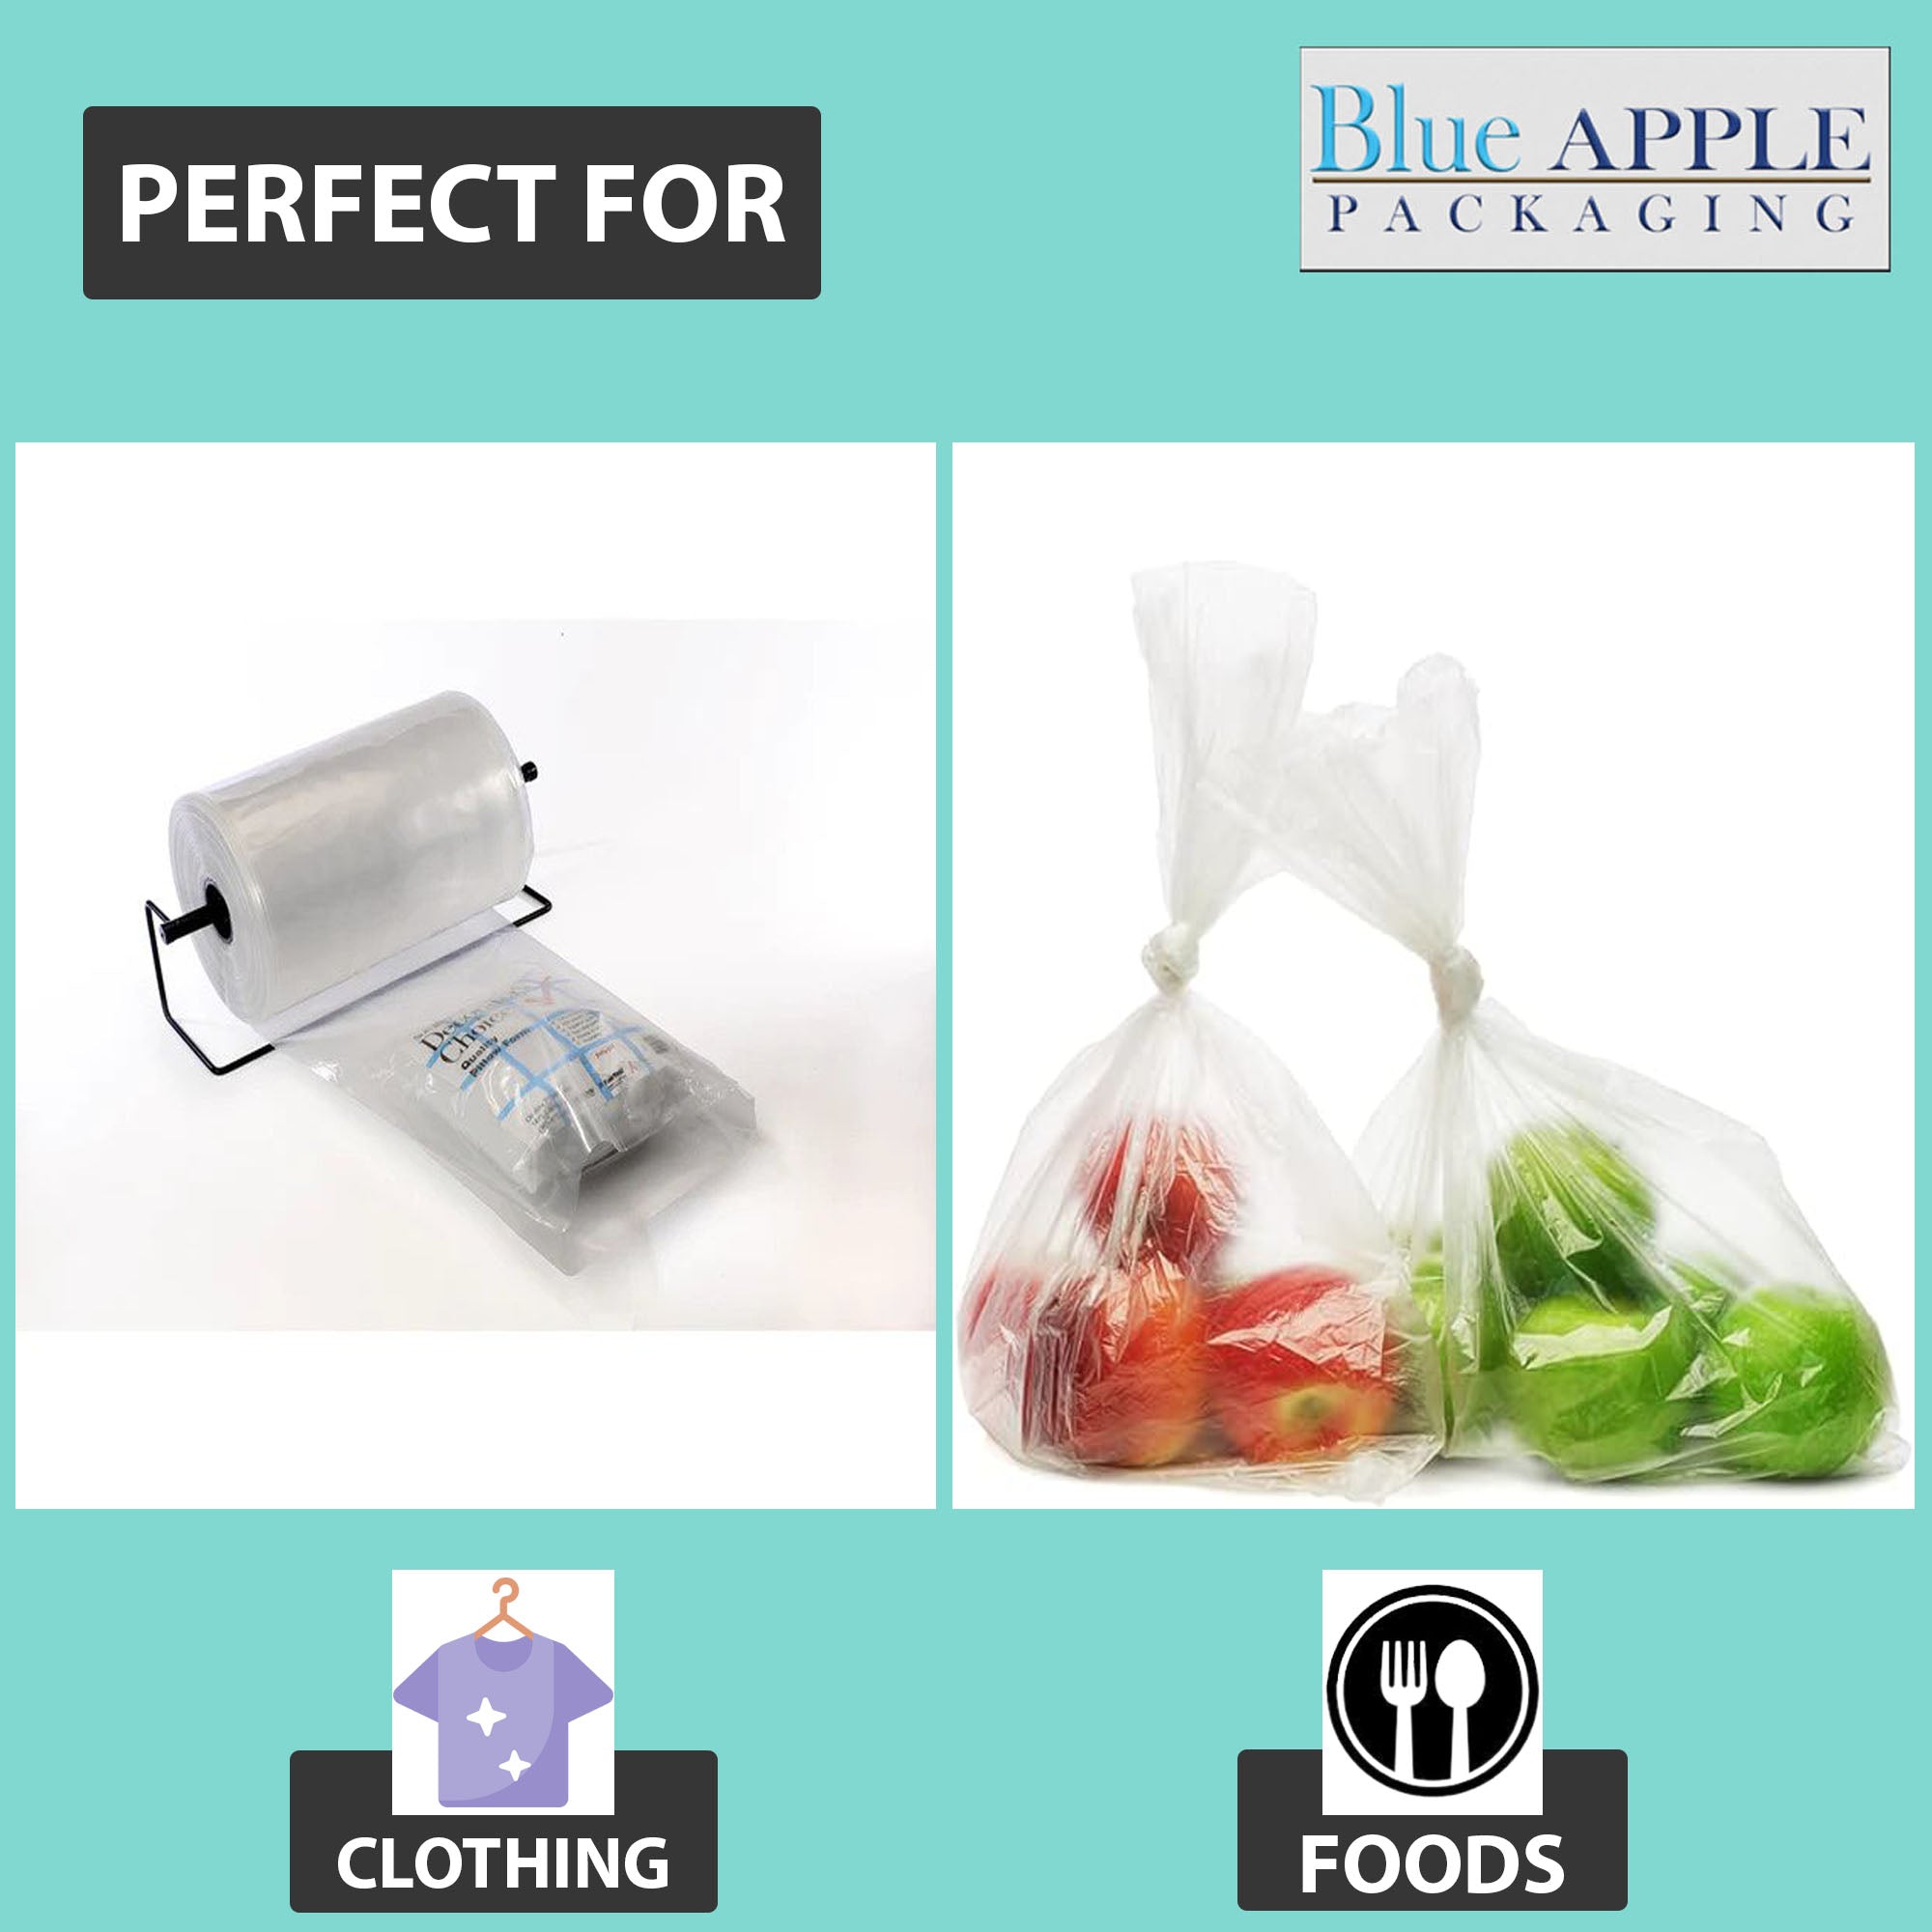 Food Grade Poly Tubing Roll Bags 2Mil 3x2150ft- Impulse Heat Sealer